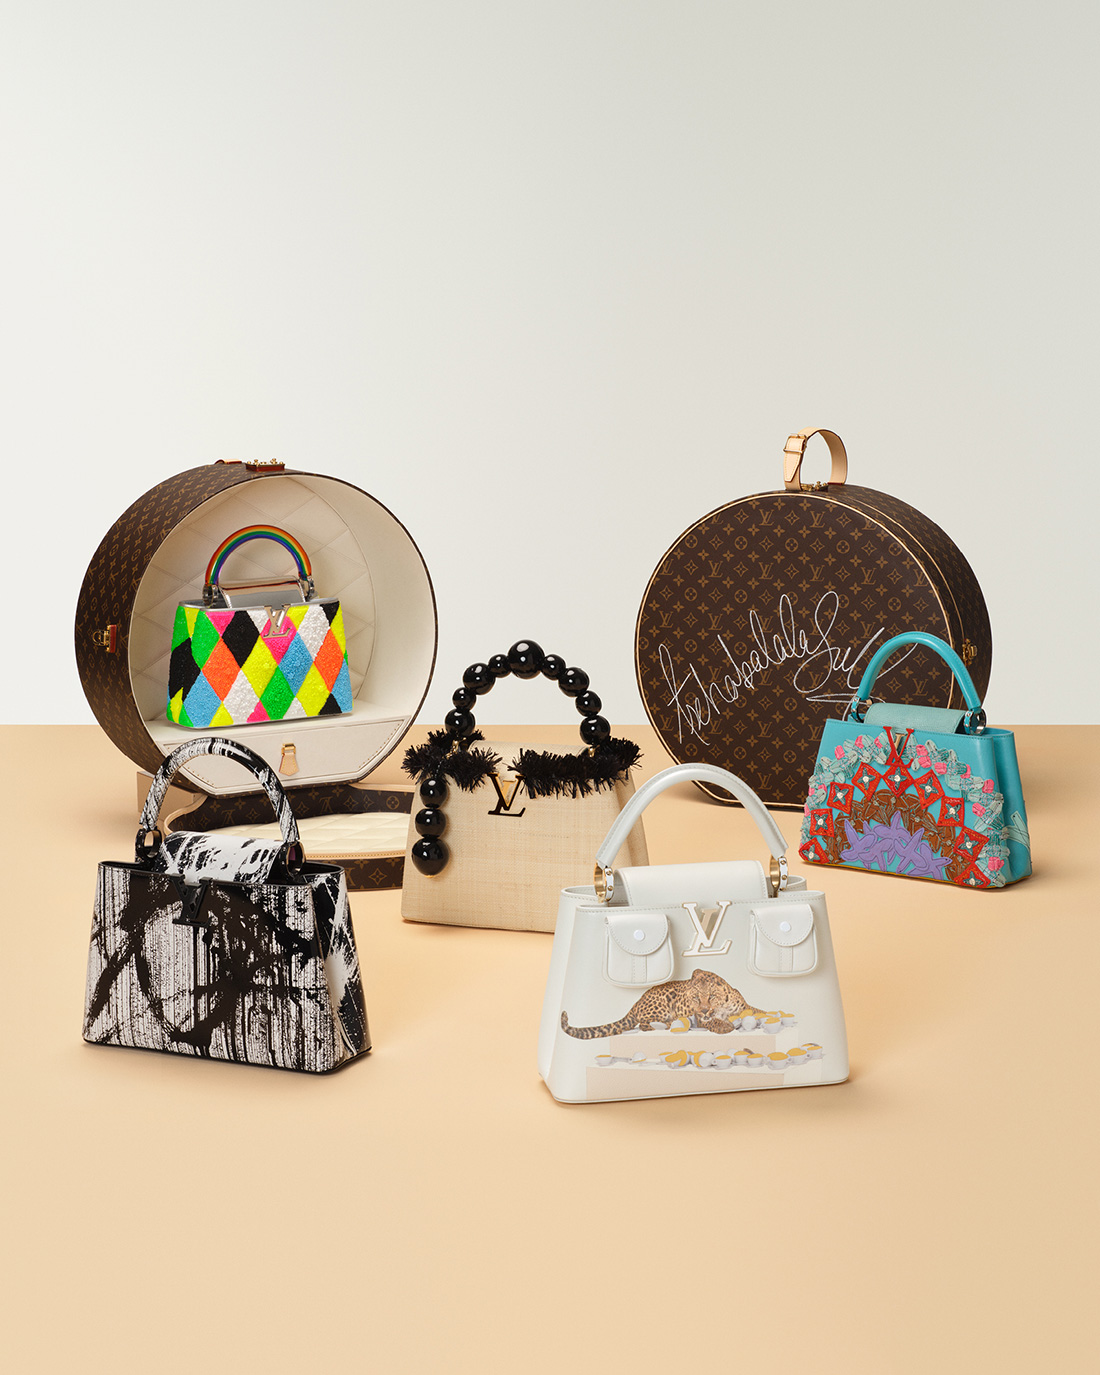 Sold at Auction: Louis Vuitton, Louis Vuitton Alma MM Handbag